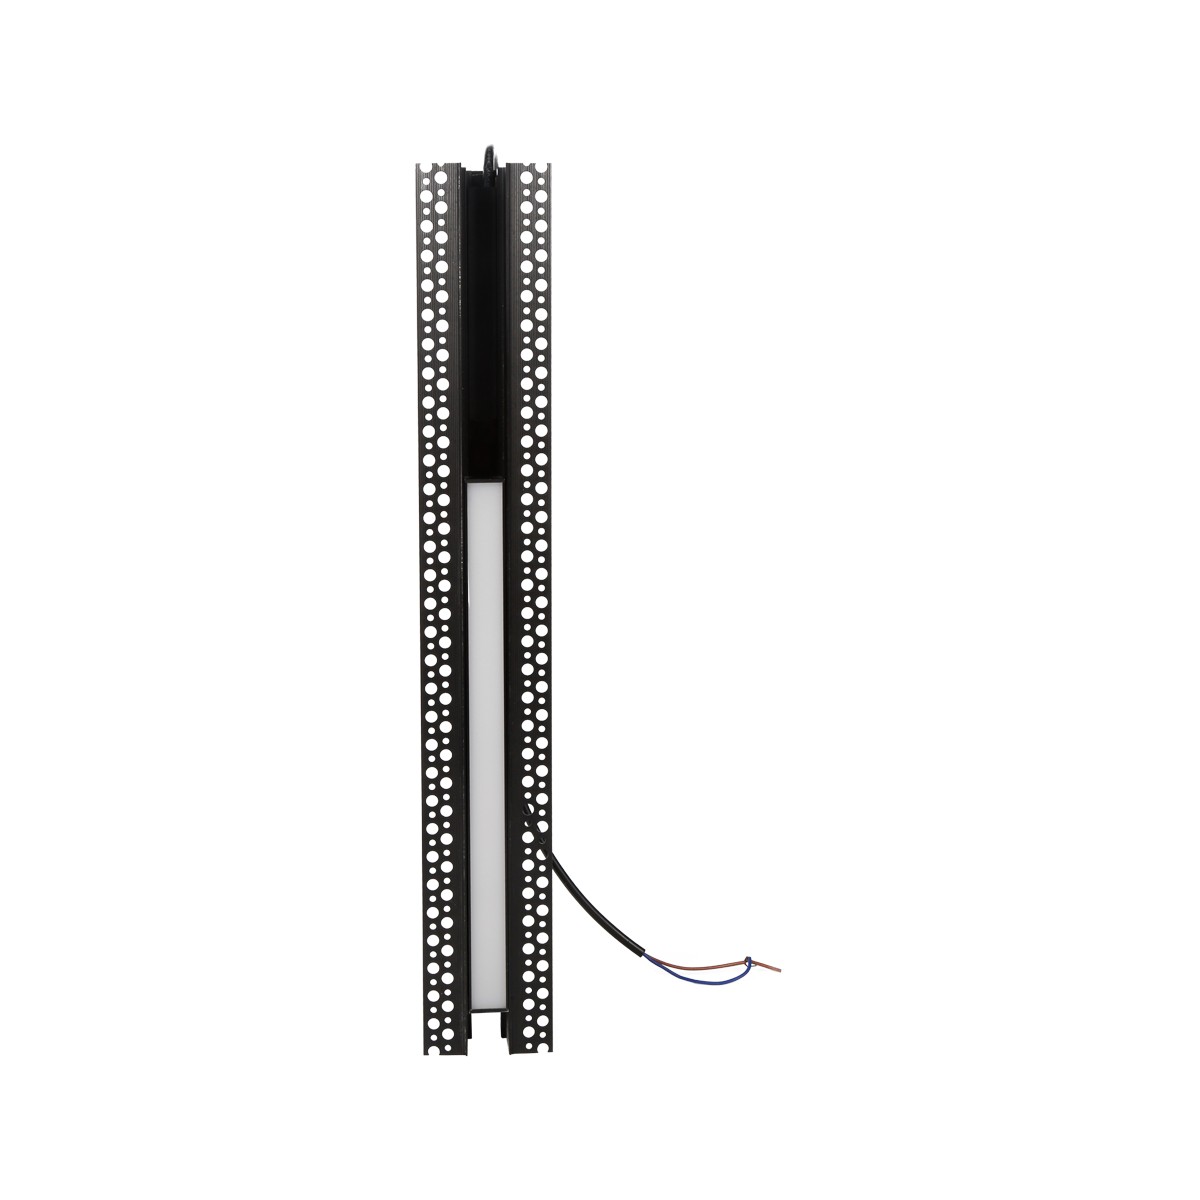 LED magnetic track light embedded hanging wire commercial household lighting LED rigid light bar